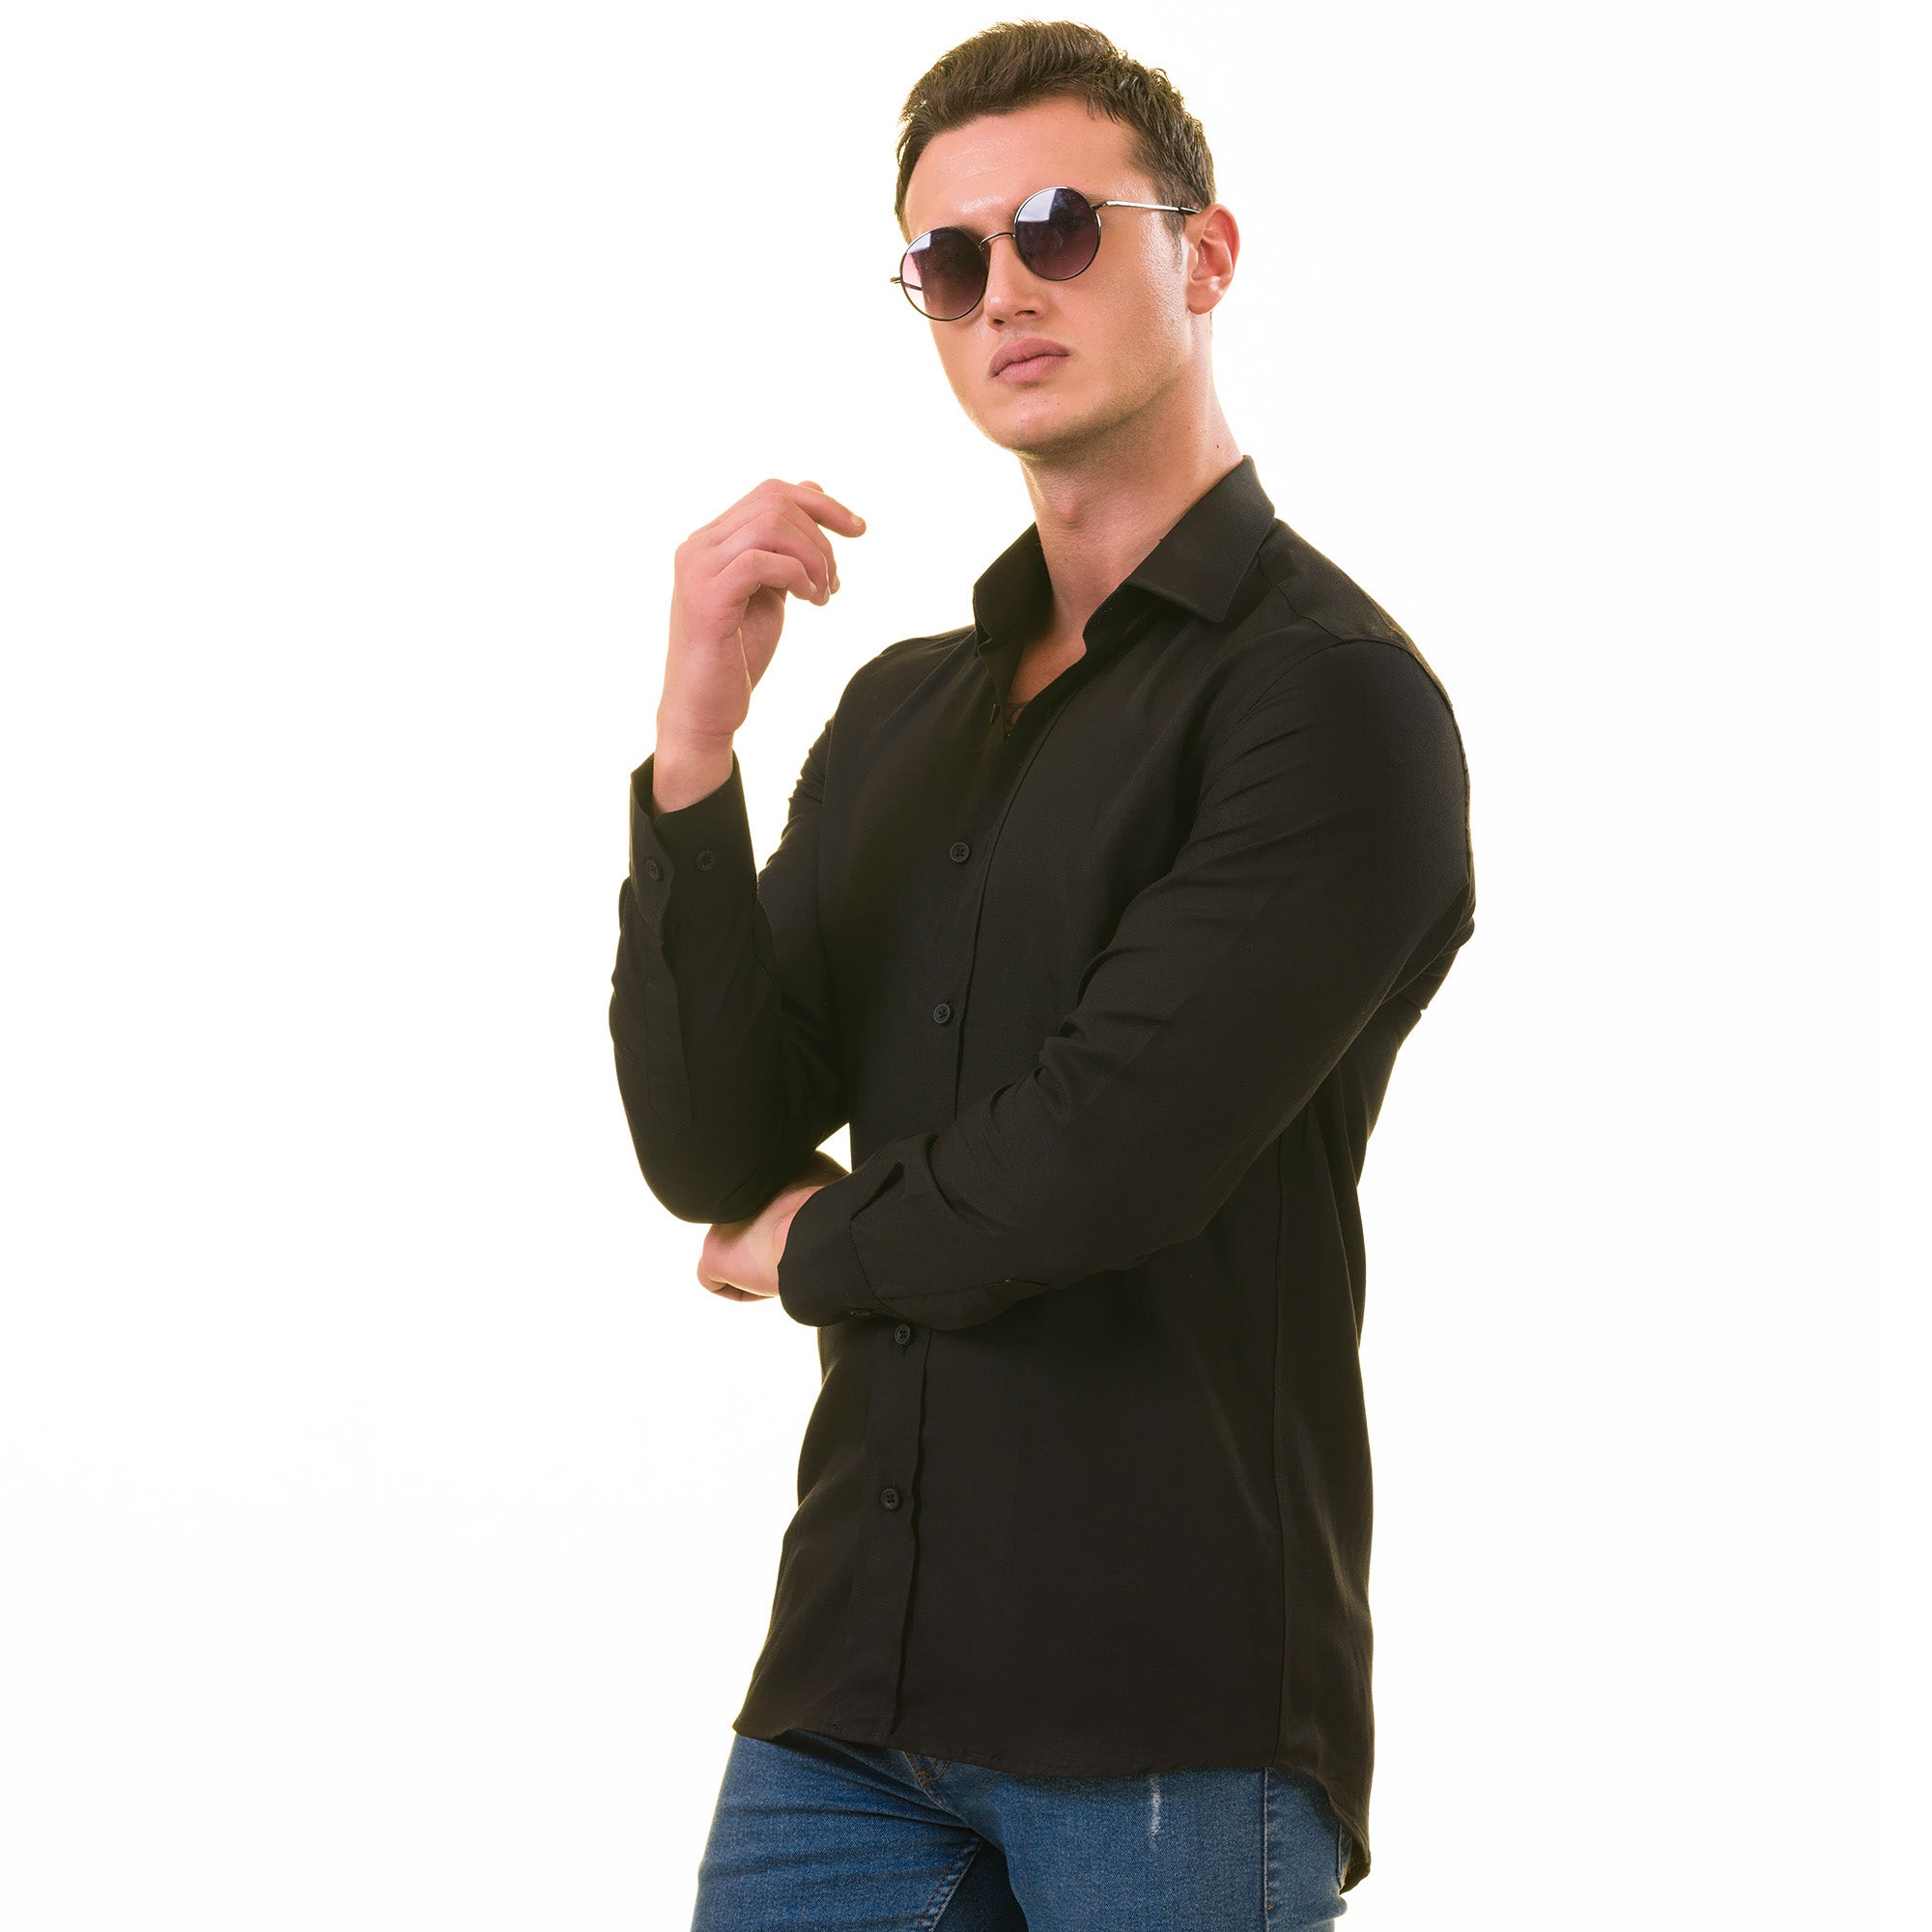 Black Luxury Men's Tailor Fit Button Up European Made Linen Shirts